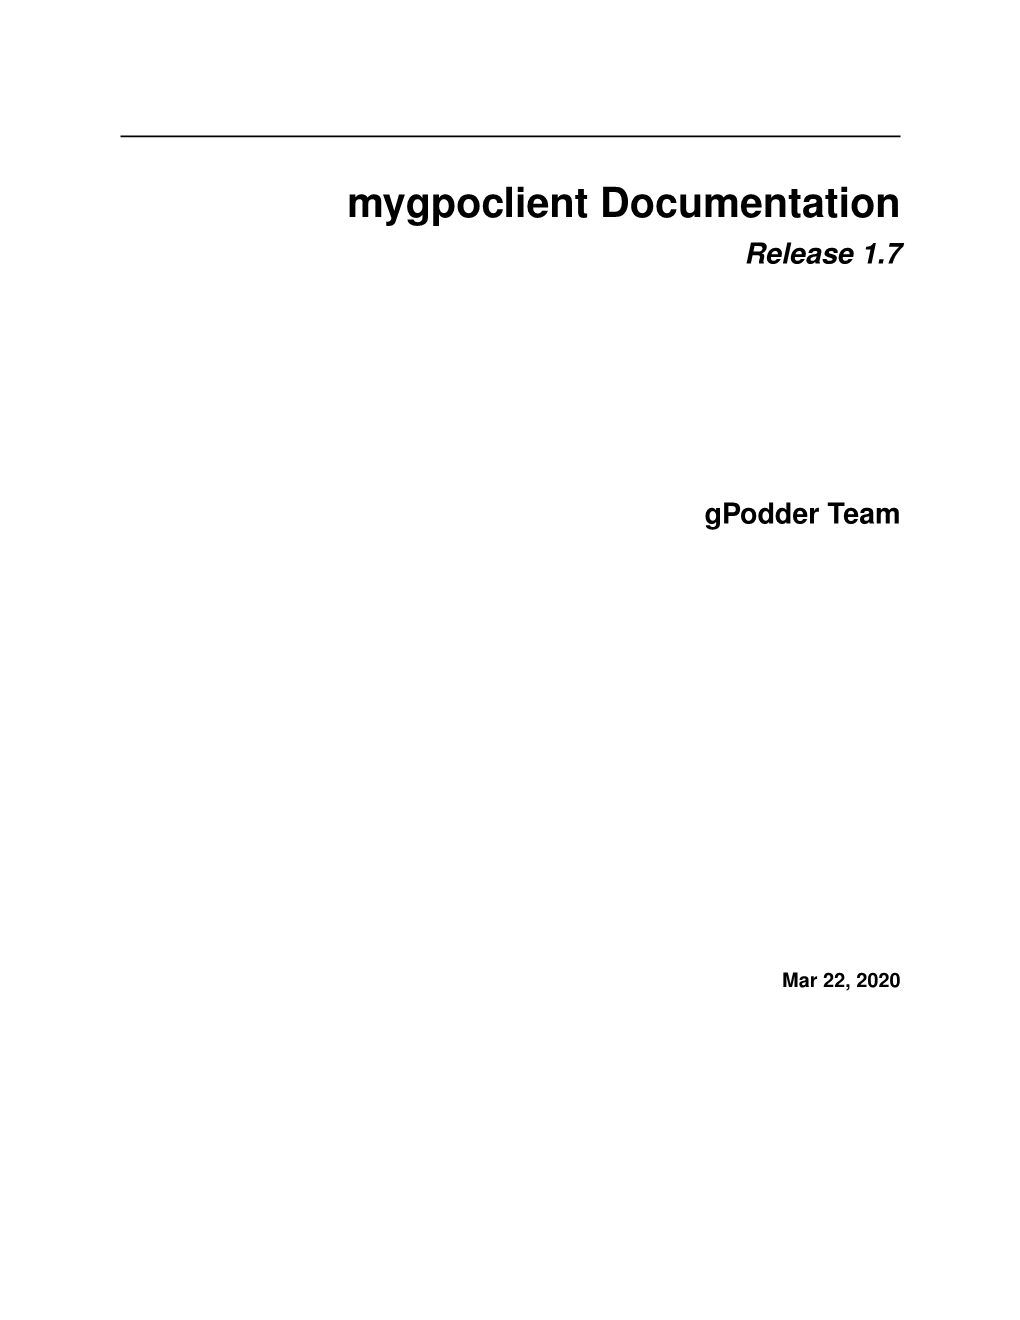 Mygpoclient Documentation Release 1.7